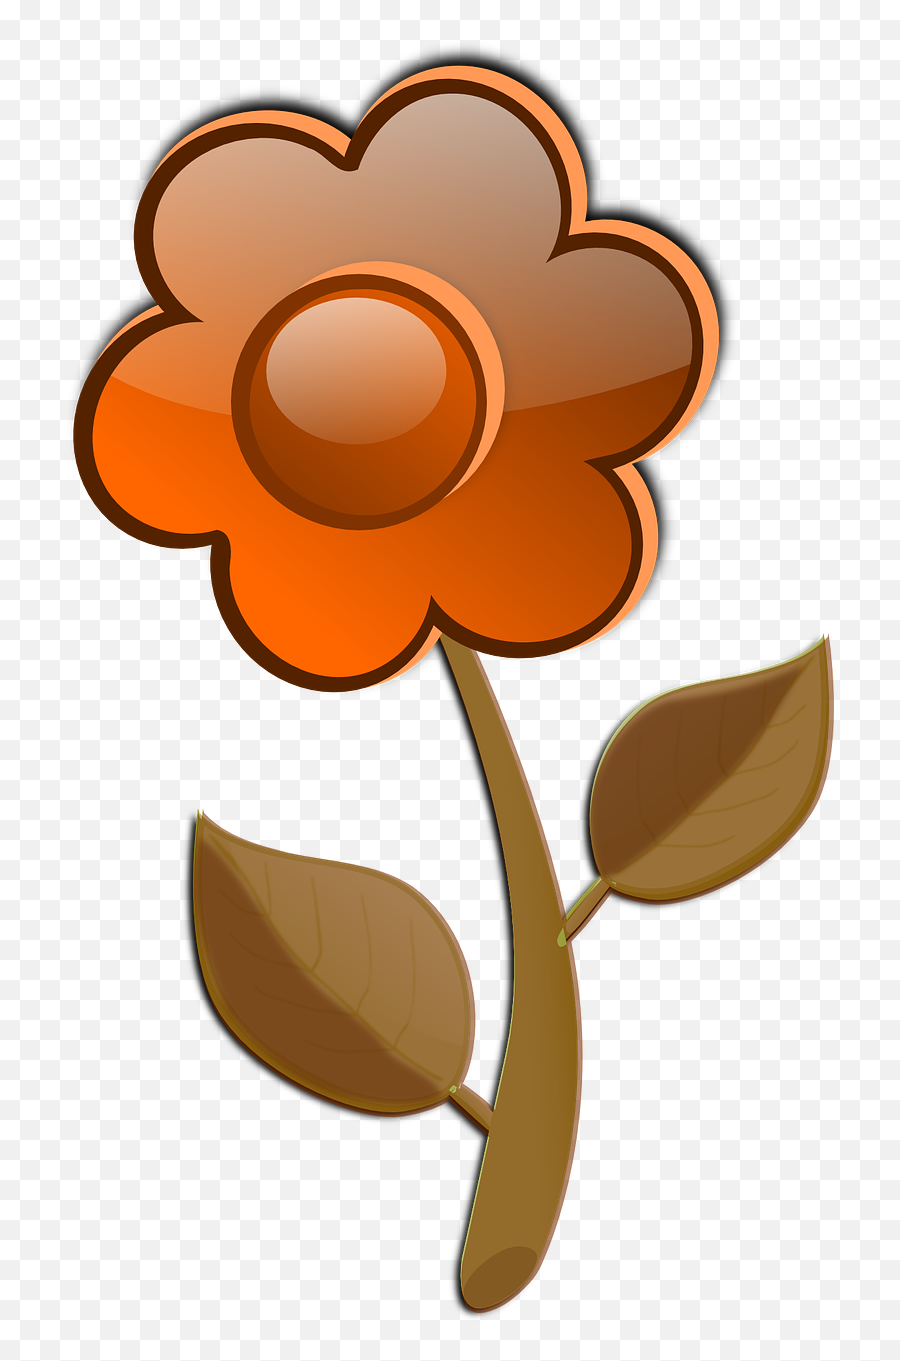 Download Free Photo Of Flowerbloomblossomglossyorange Emoji,Orange Flower Clipart